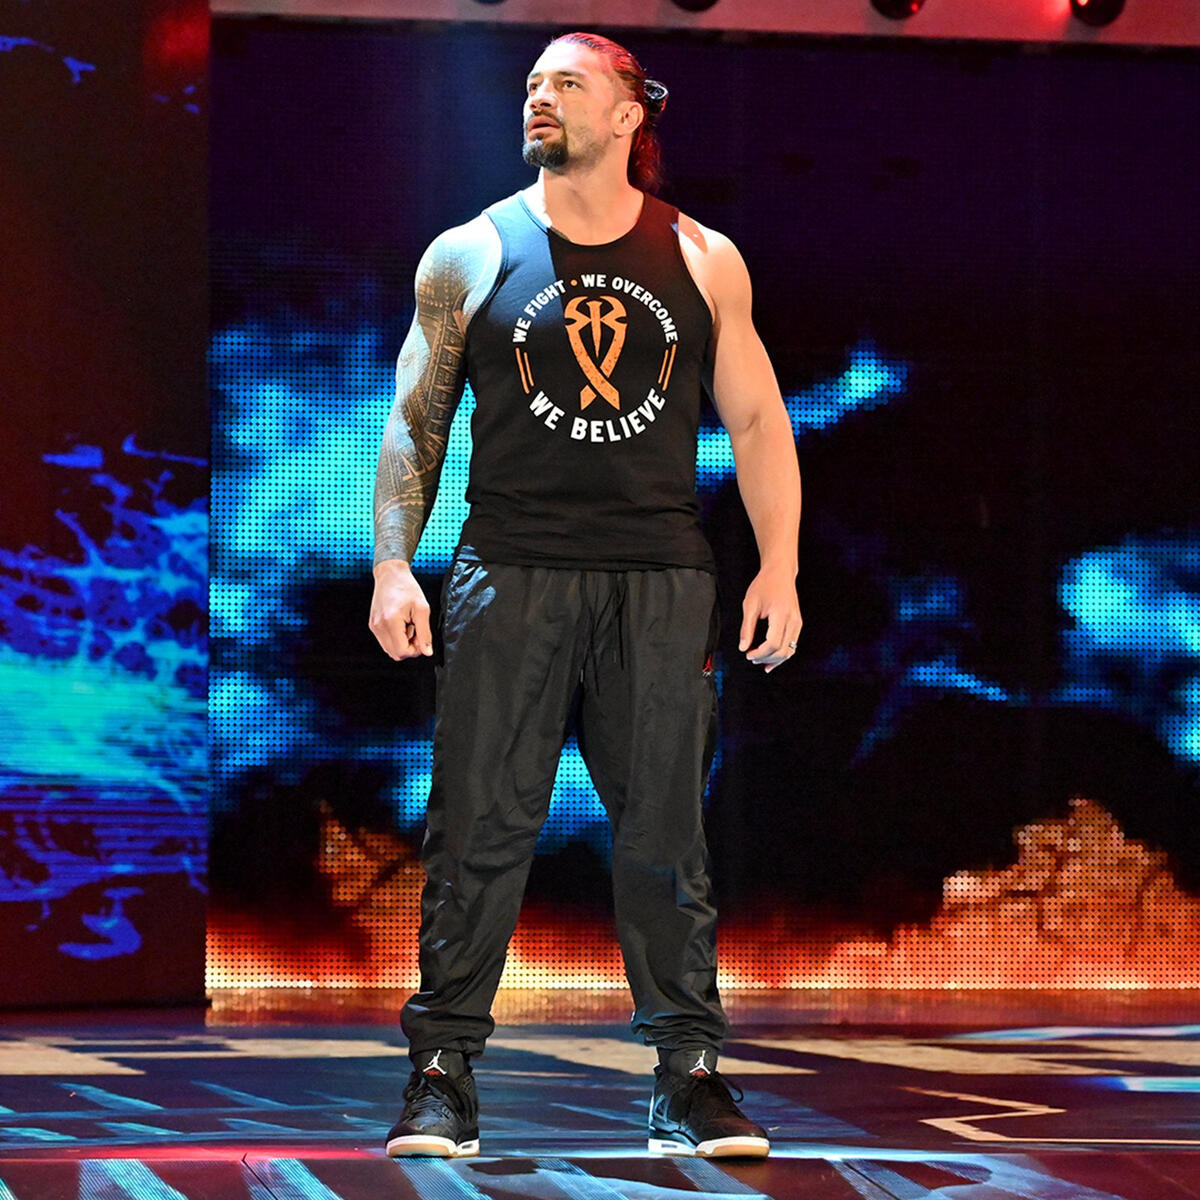 Is WWE star Roman Reigns sponsored by Nike?